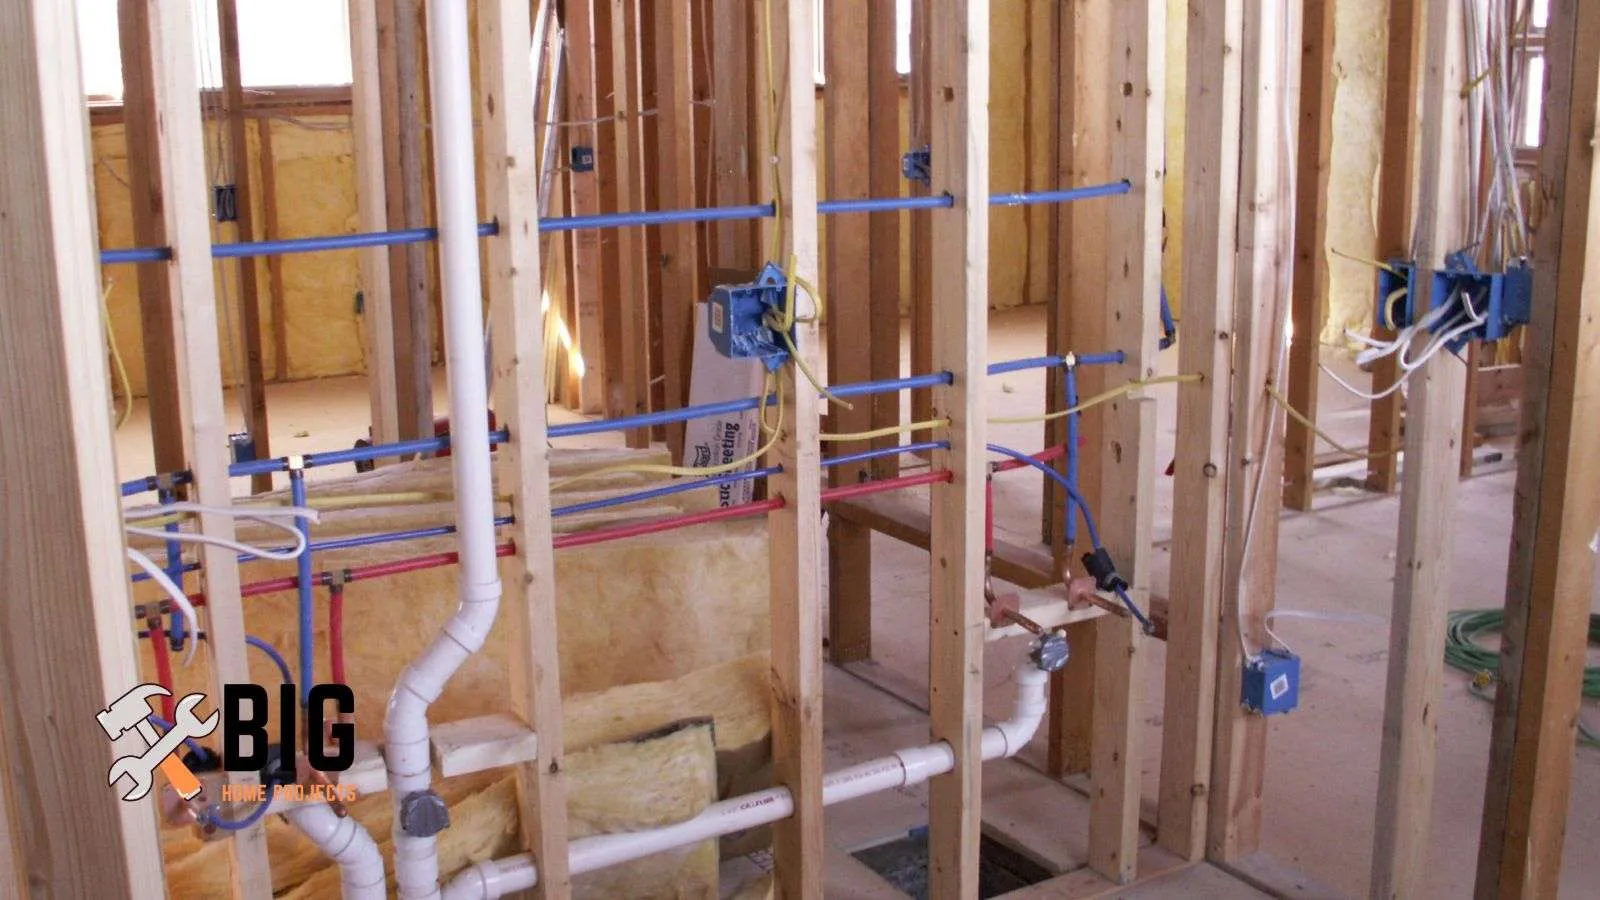 Construction plumbing - bighomeprojects.com